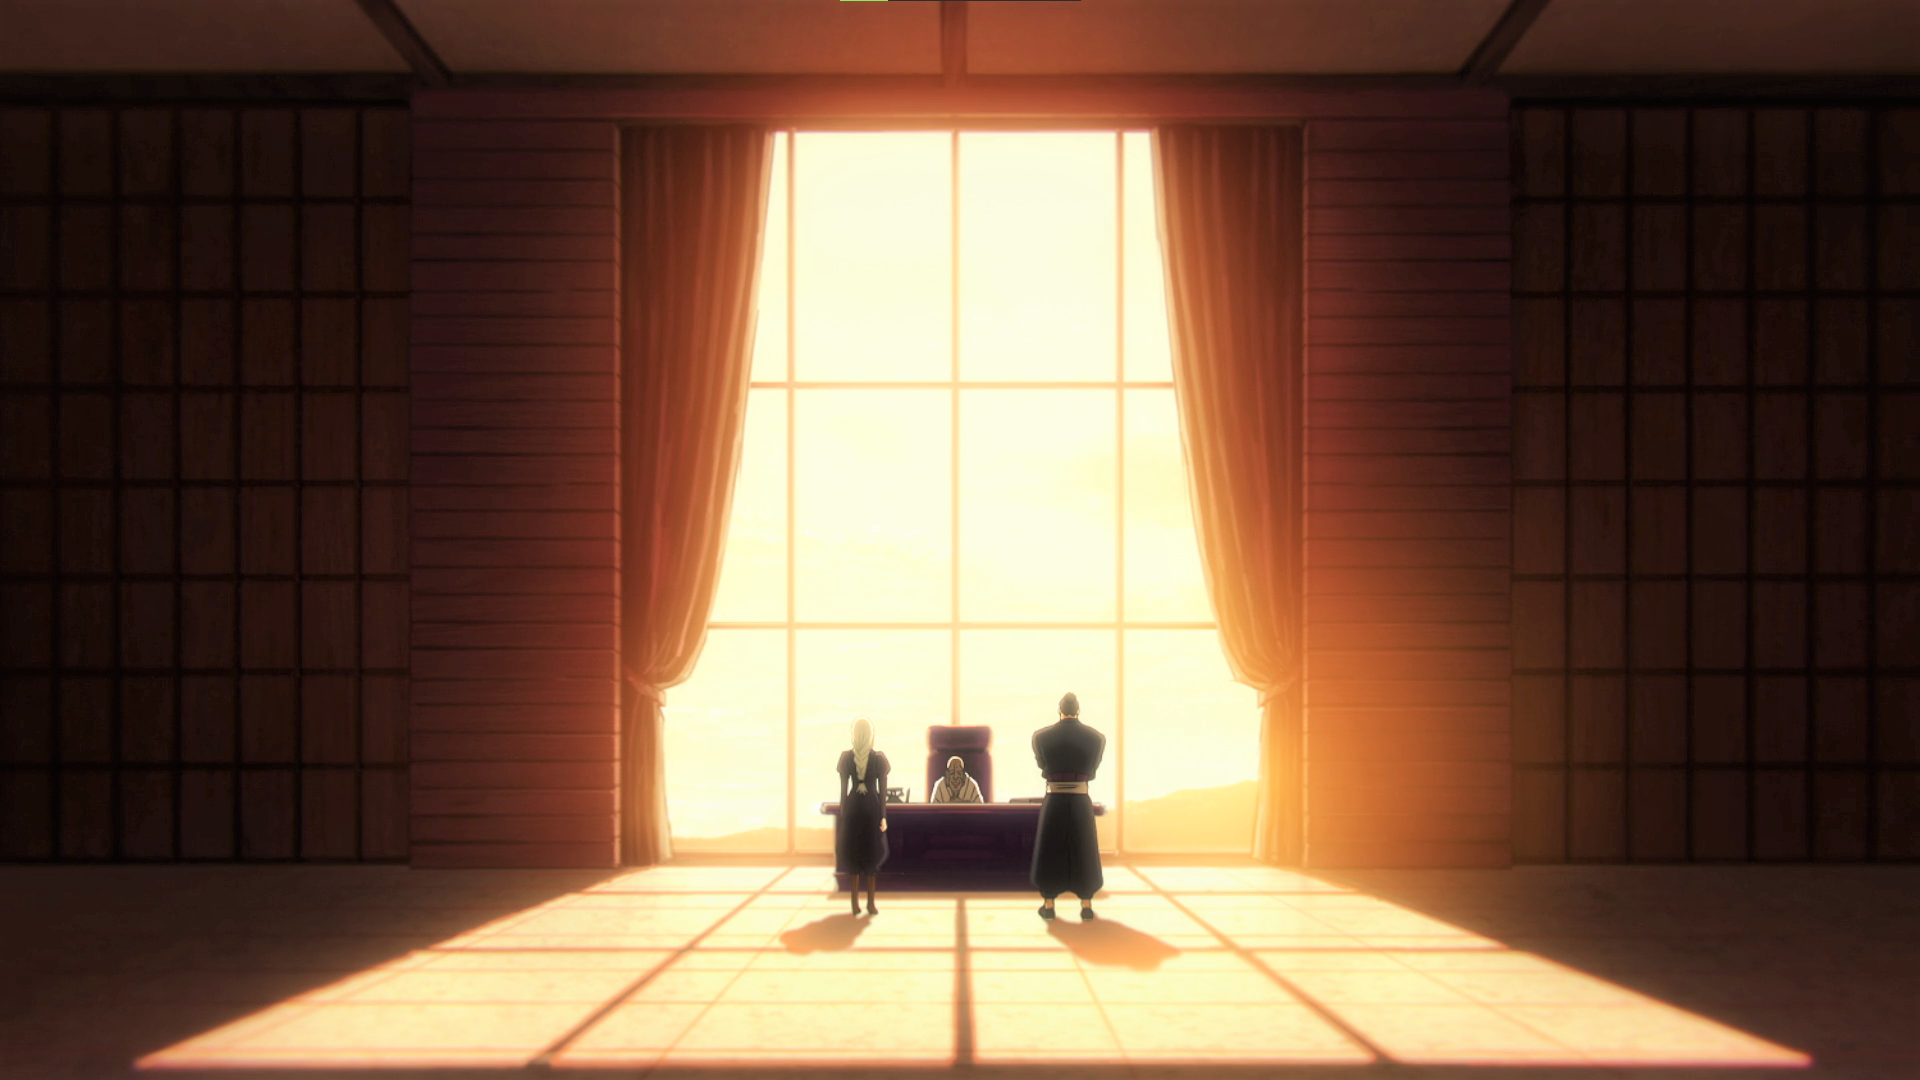 Anime 1920x1080 Jujutsu Kaisen Meimei window curtains sunlight desk braids anime anime screenshot anime boys anime girls